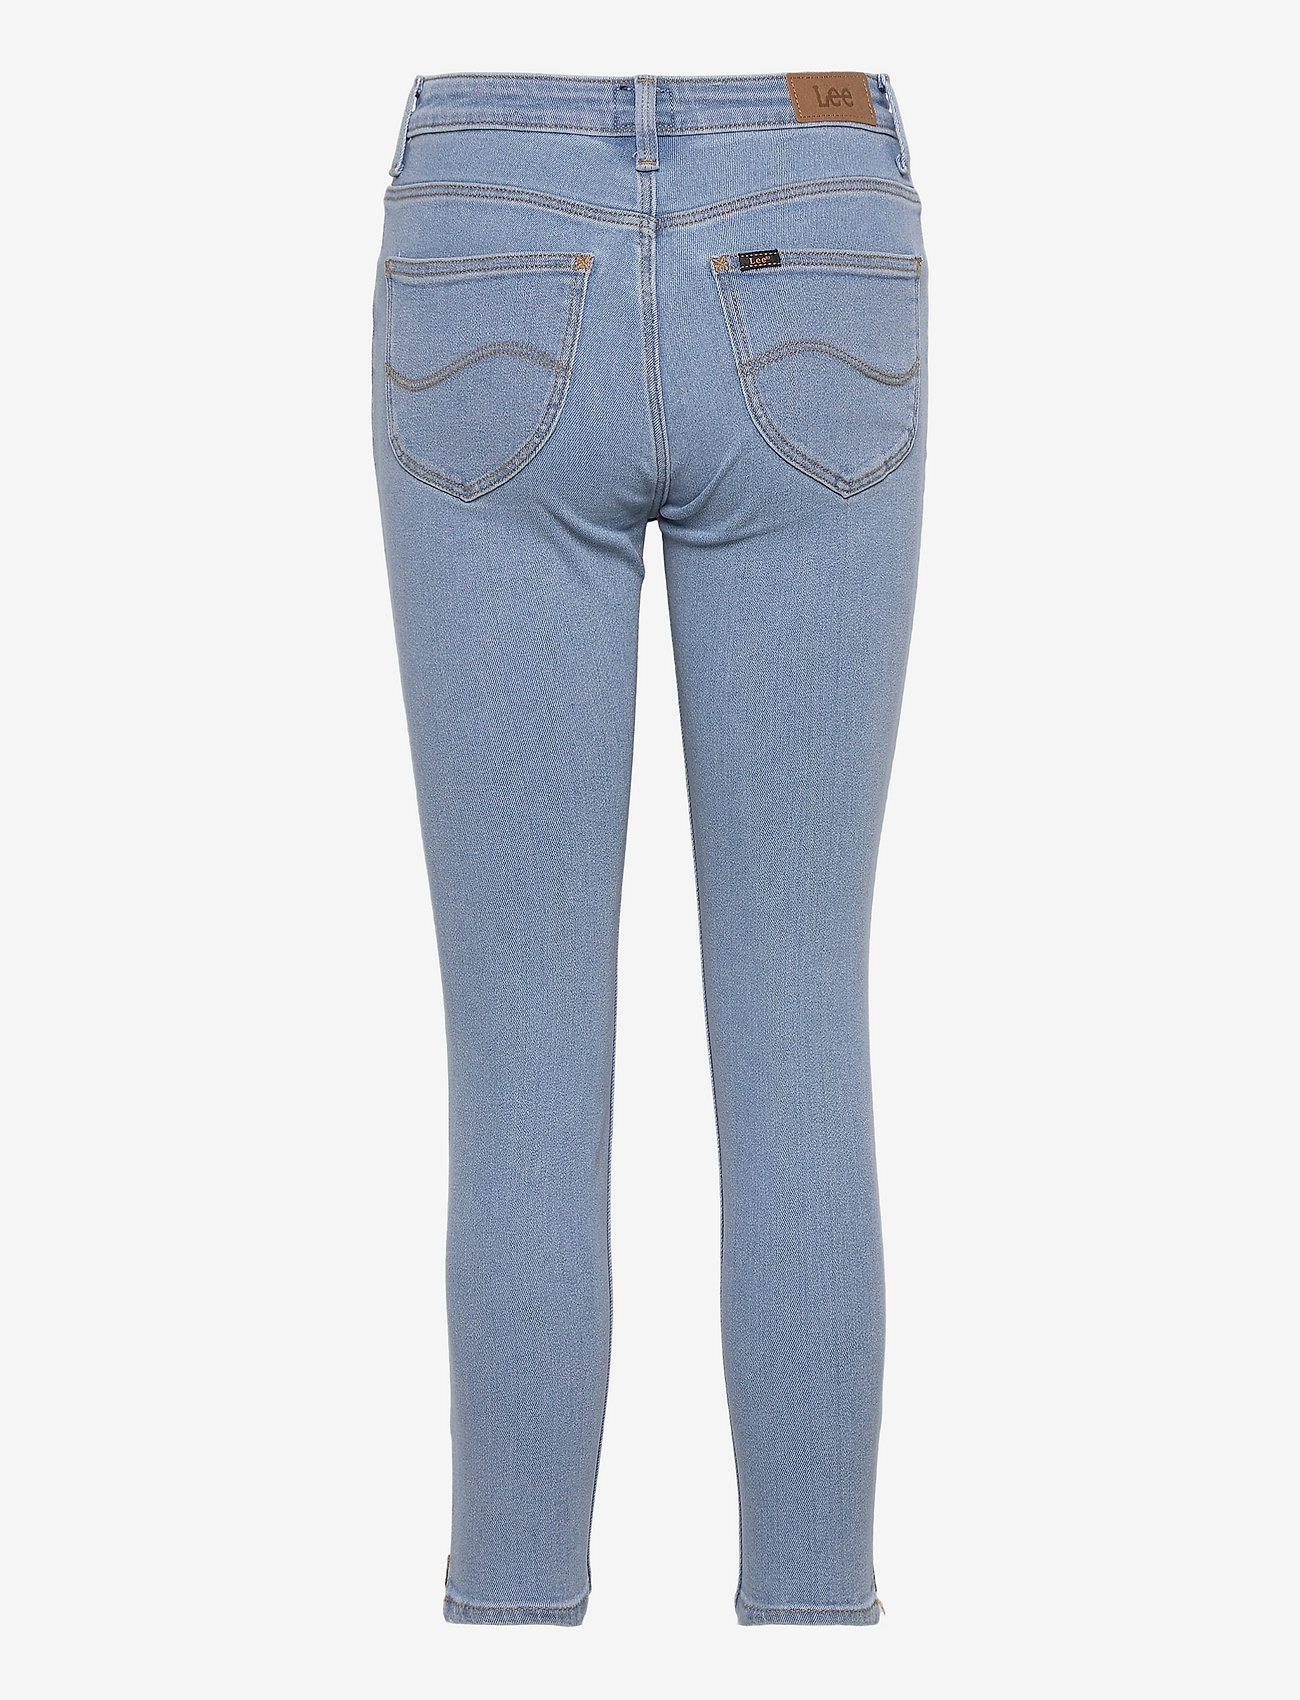 Lee Jeans - SCARLETT HIGH ZIP - dżinsy skinny fit - light ruby - 1